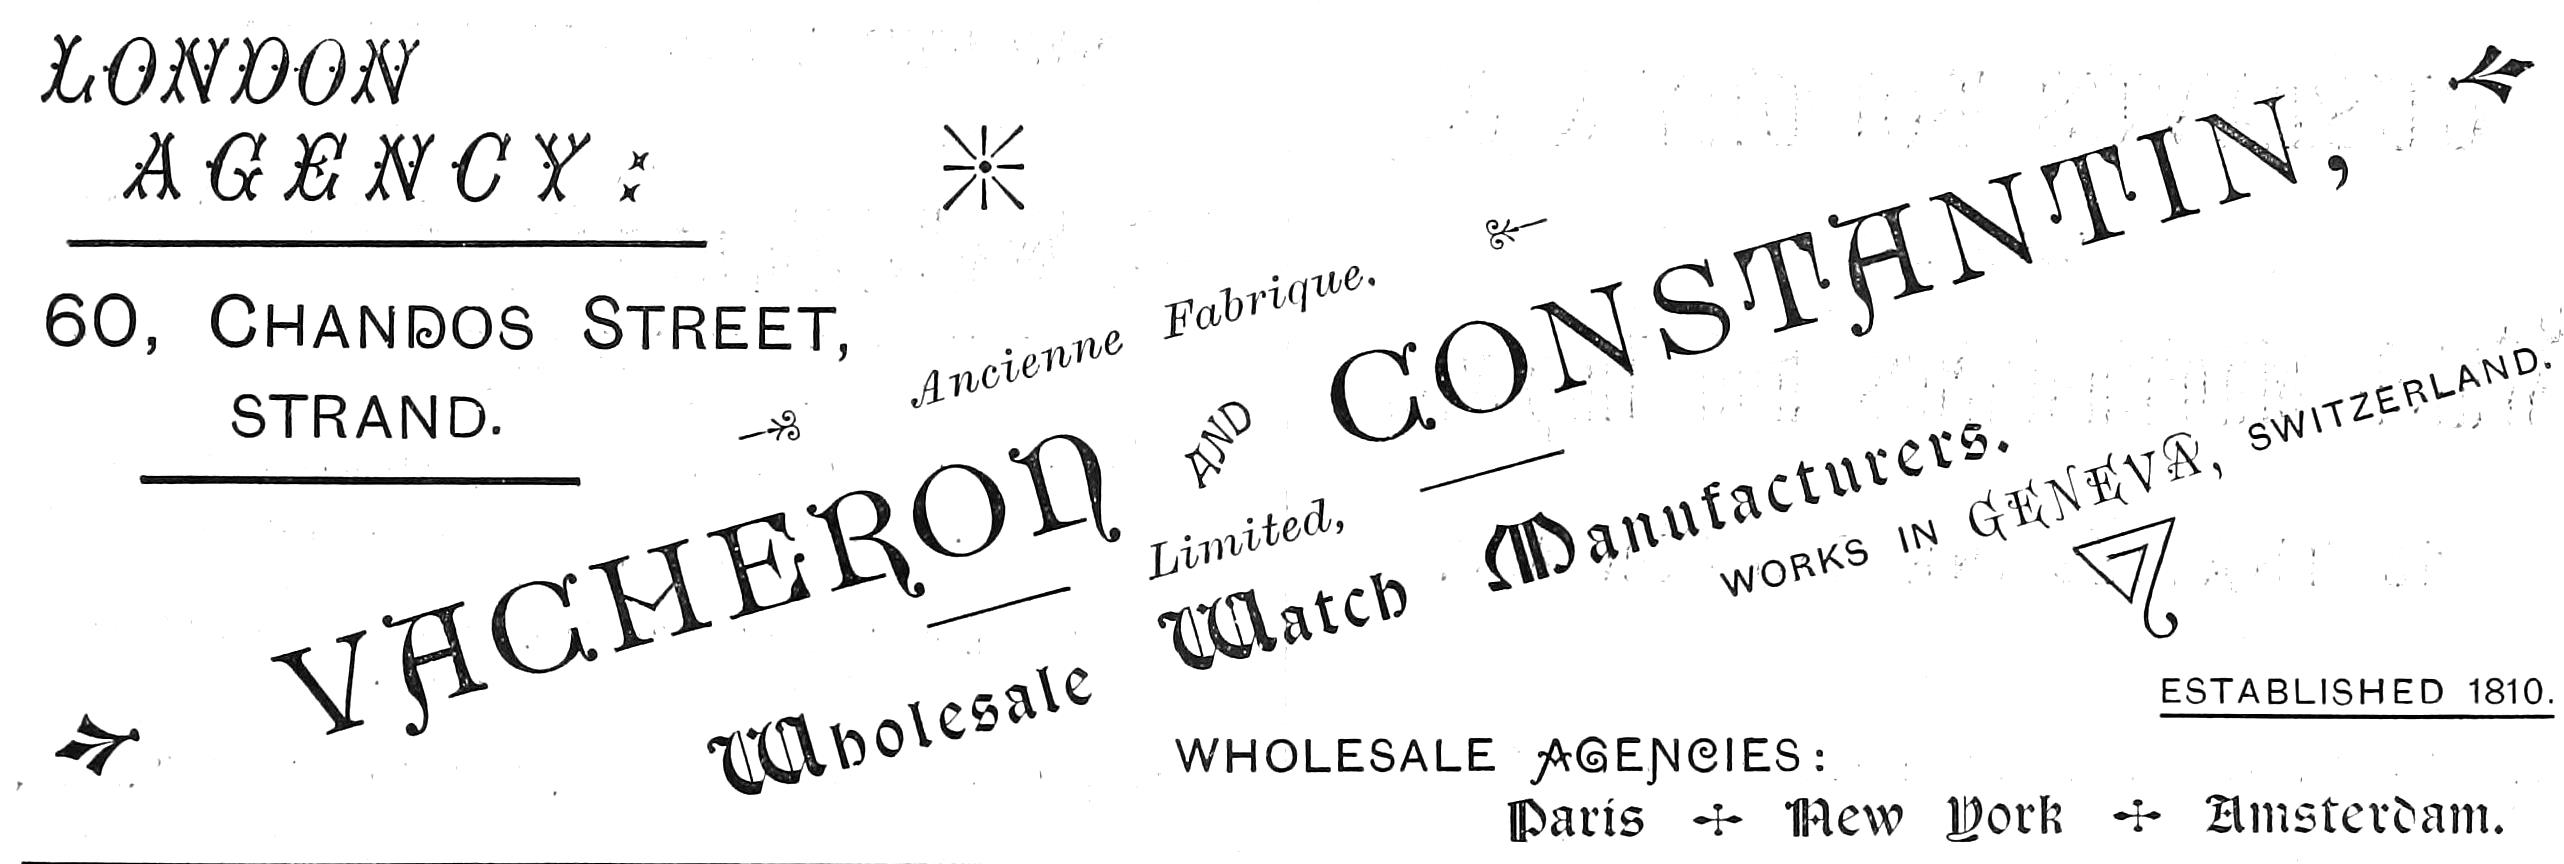 Vacheron & Constantin 1887 0.jpg